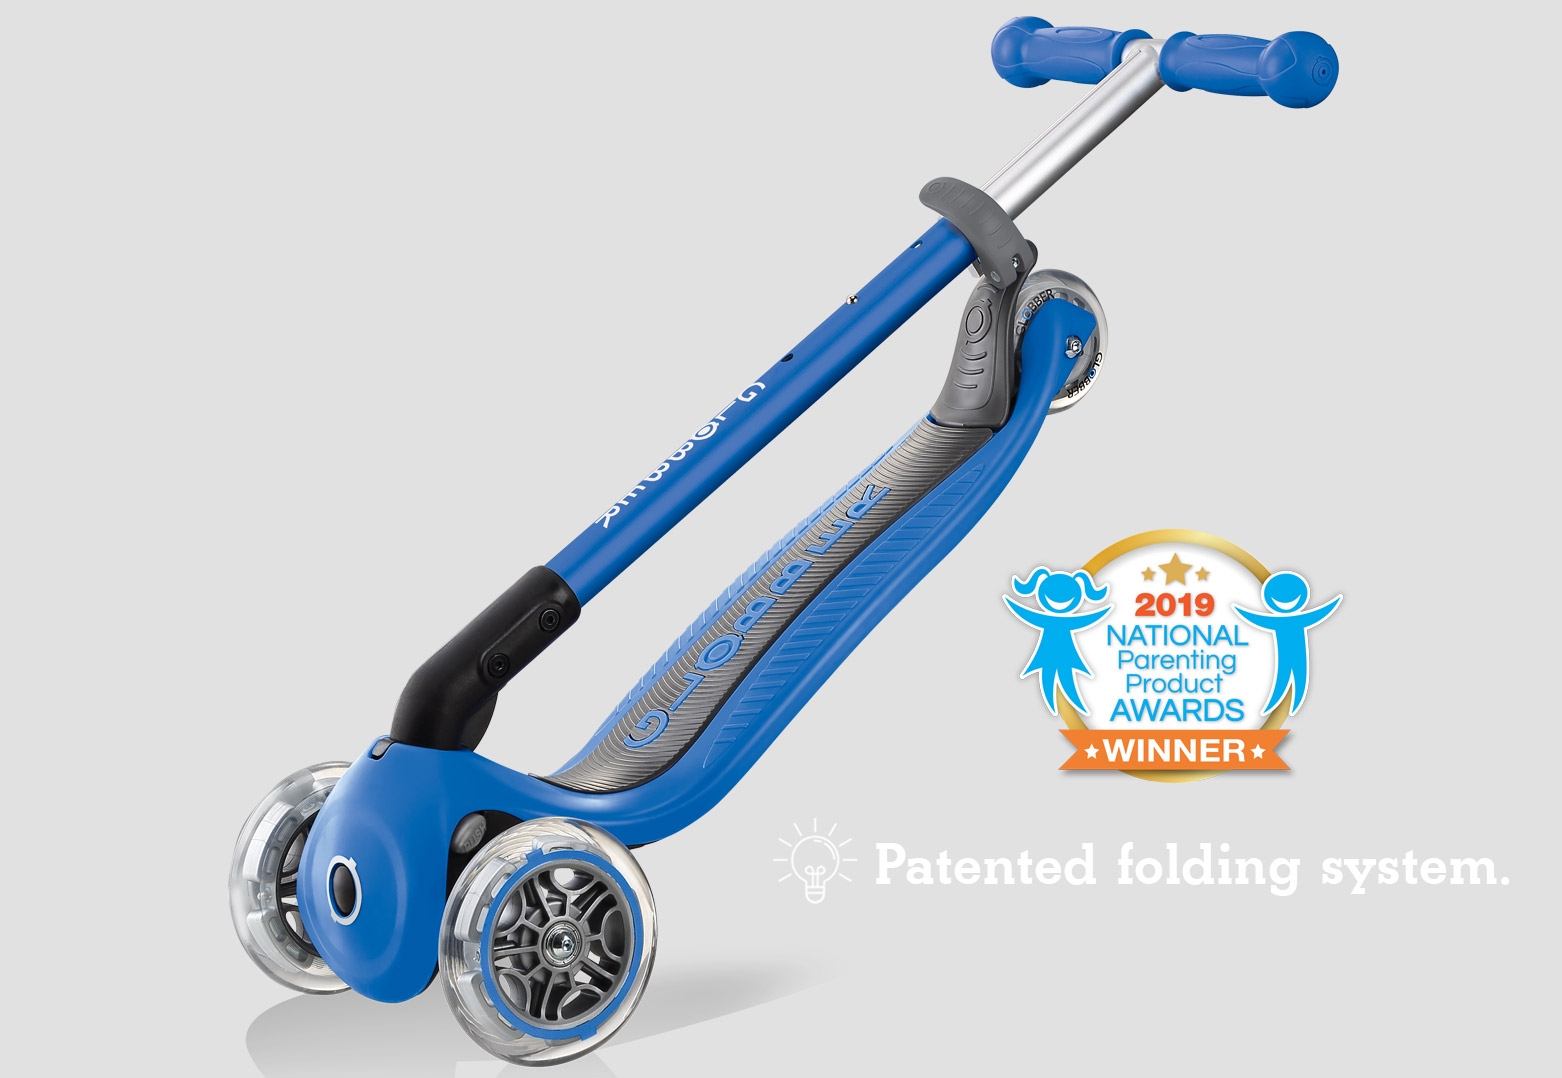 Folding 3 wheel scooter for kids